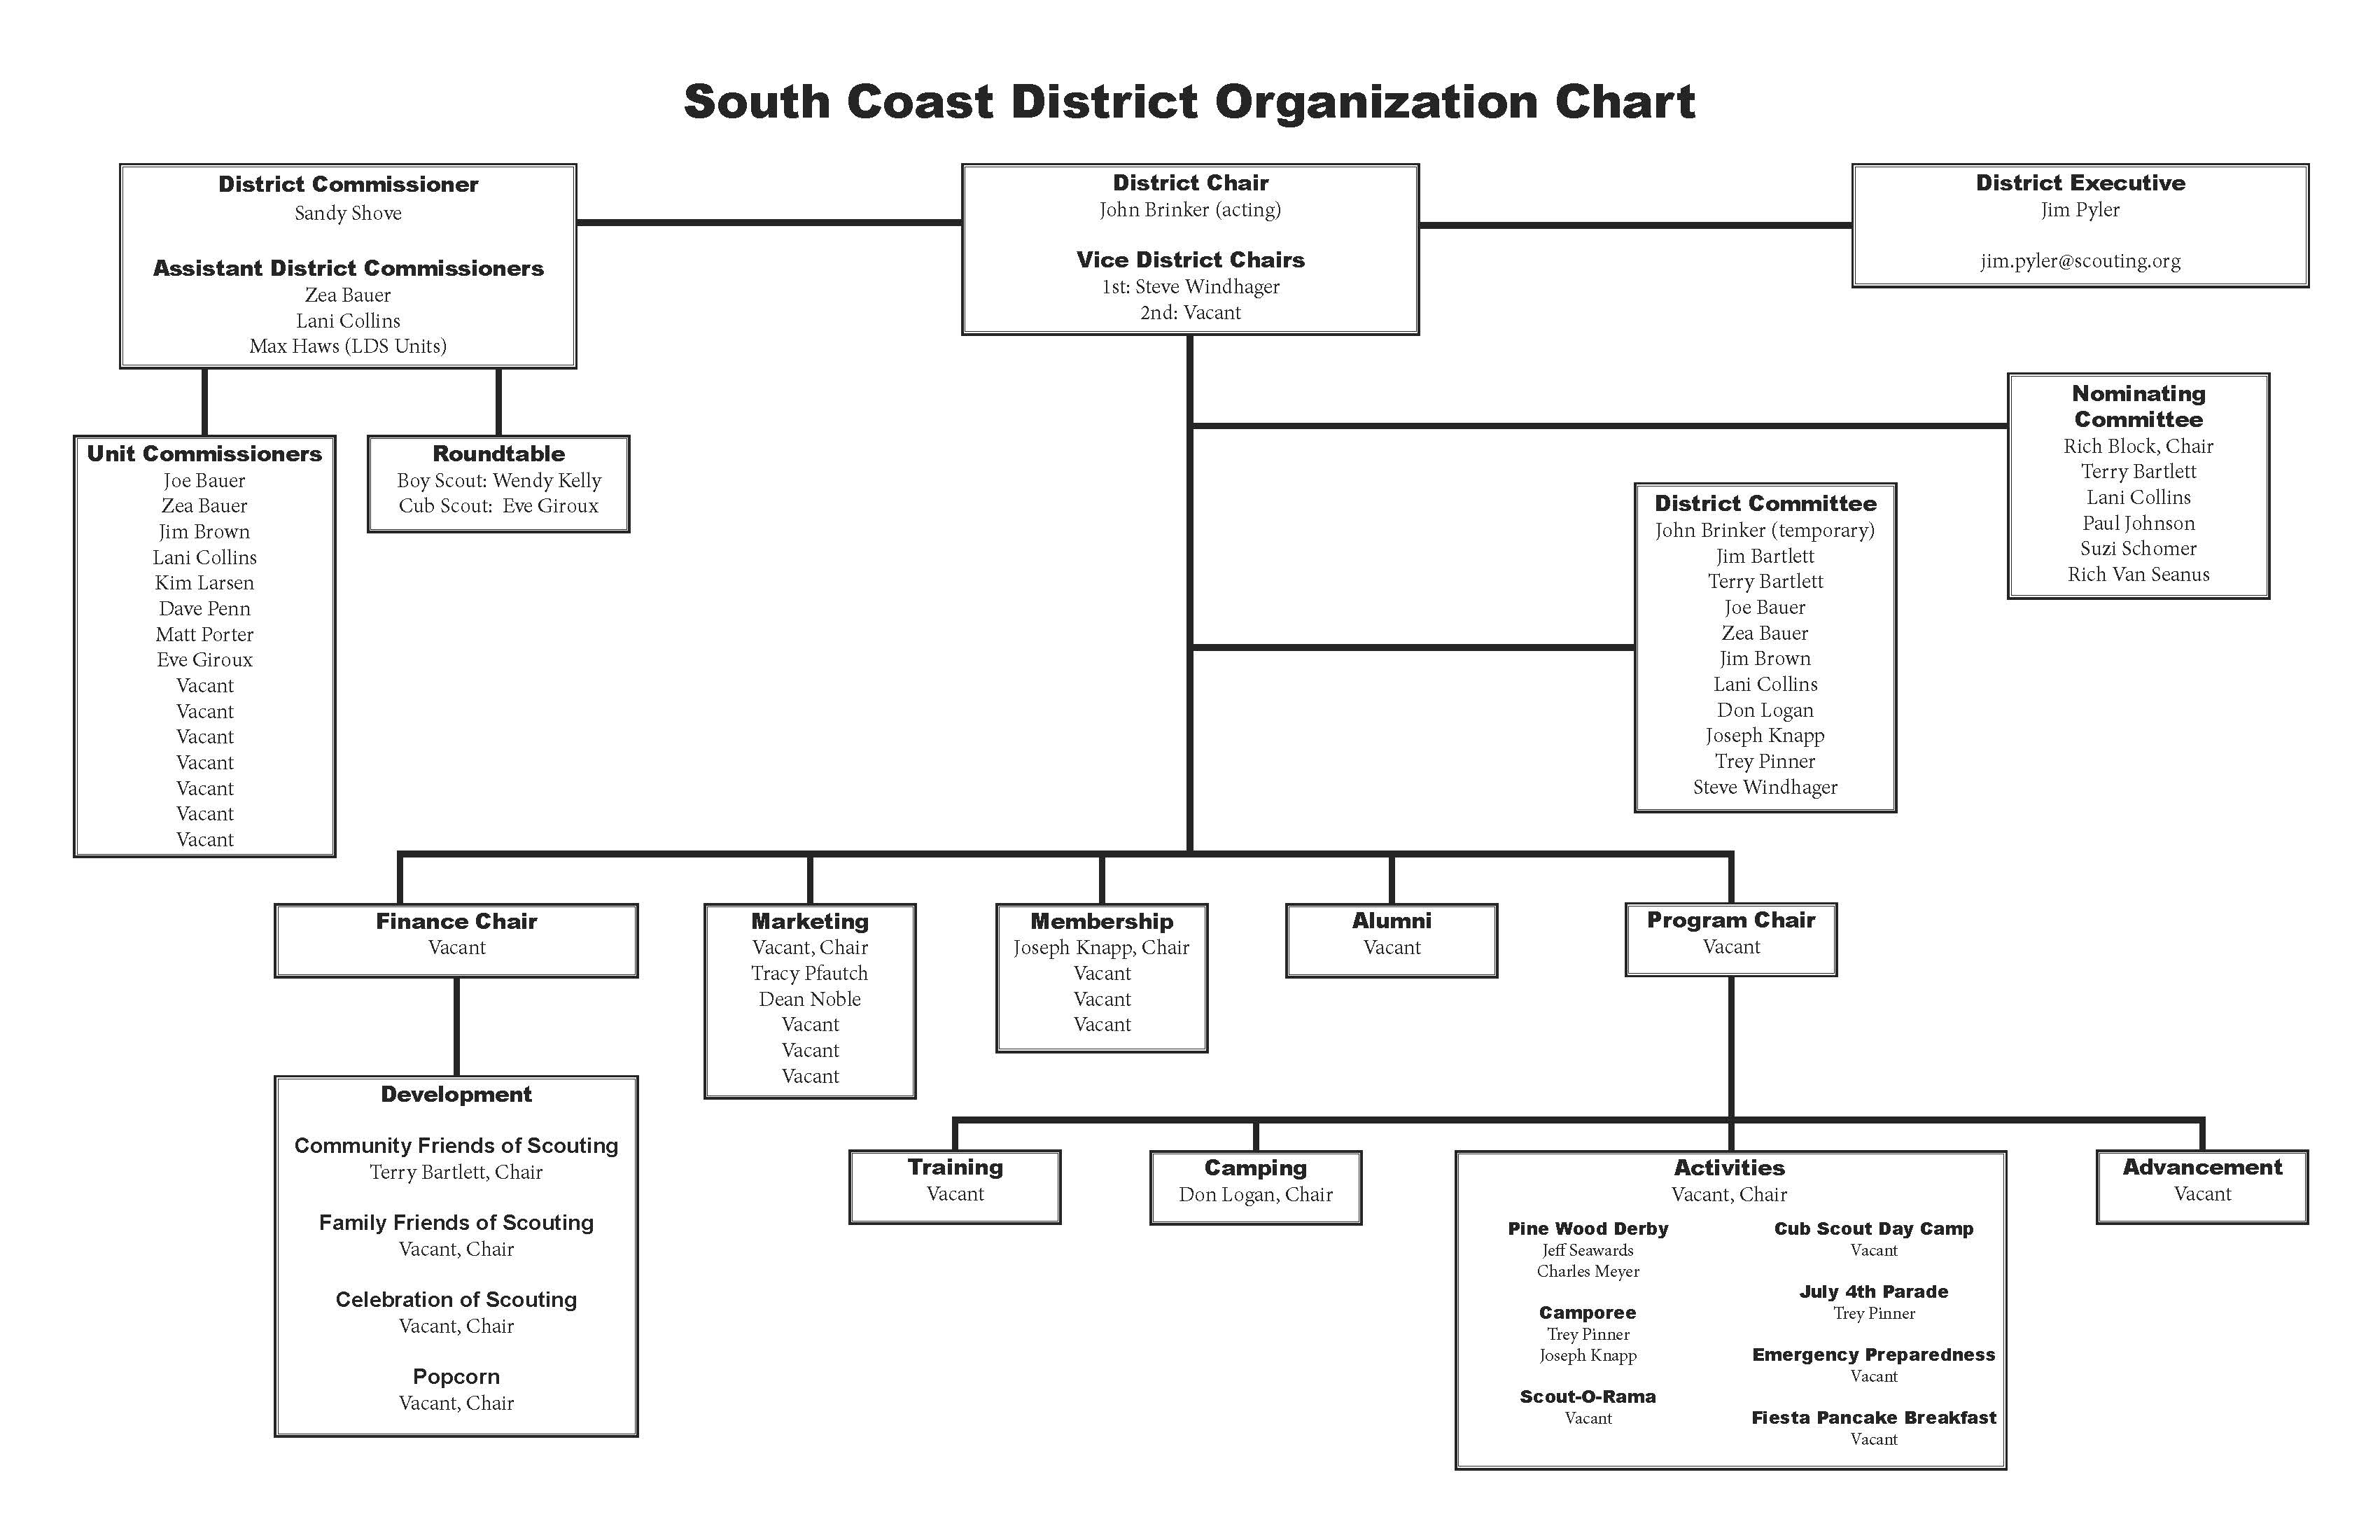 South Coast Leadership Chart June 2017